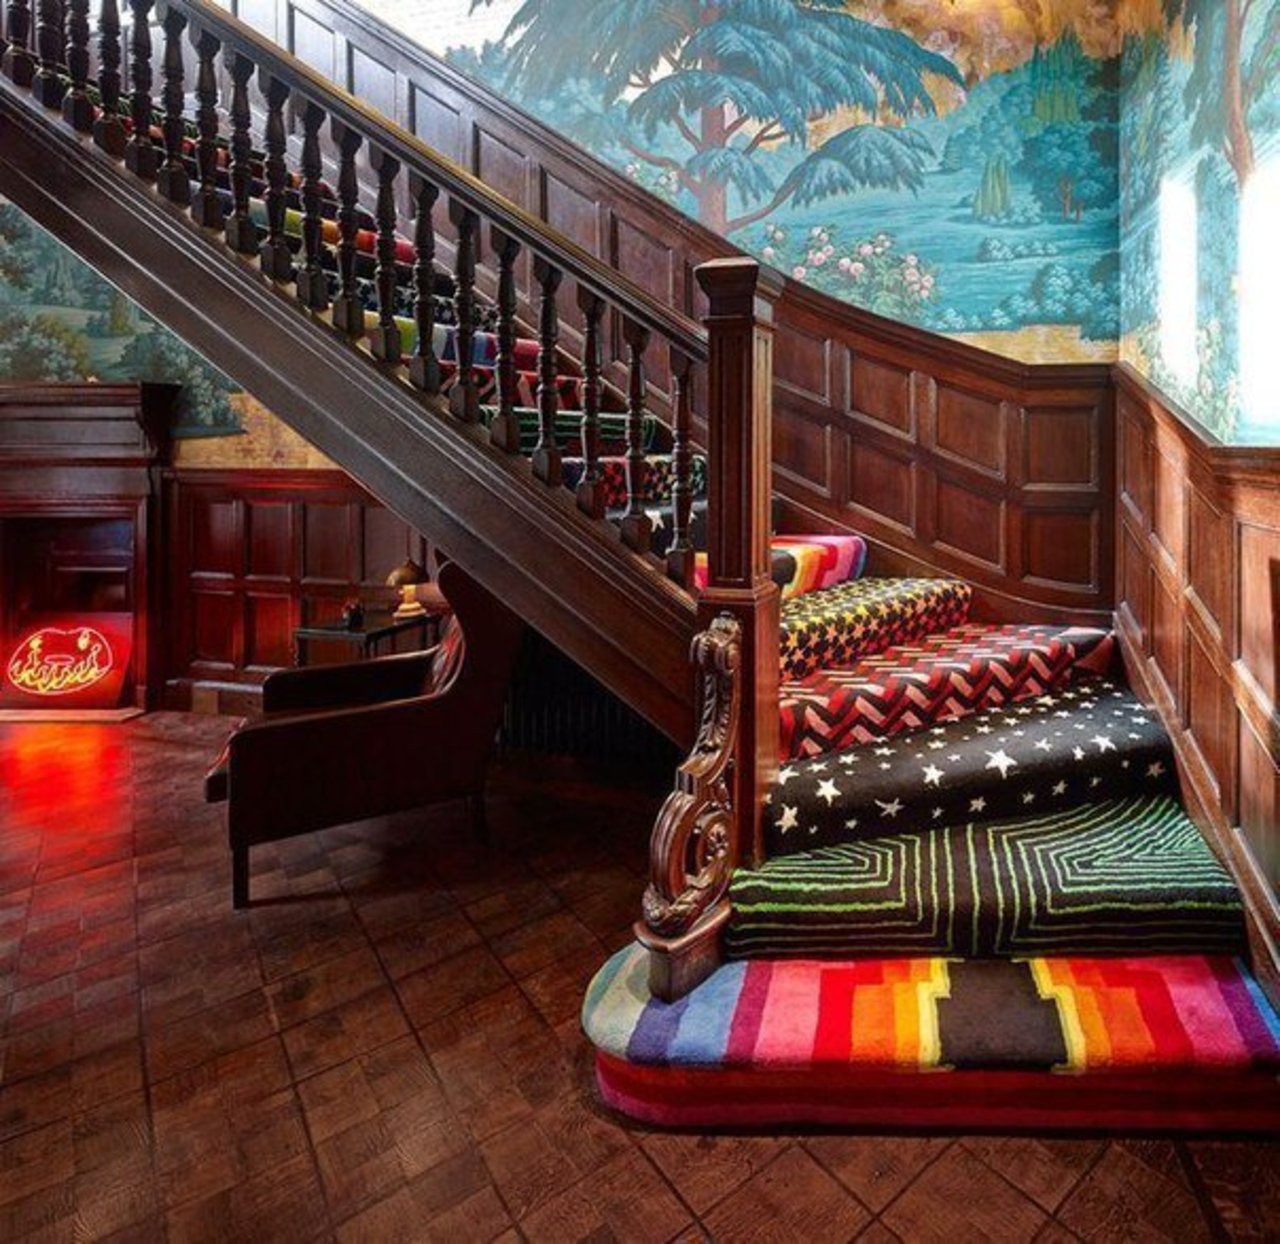 RT @alexeylyolik: Magic soft staircase#magic #soft #staircase https://t.co/Jfpm6LZKpQ